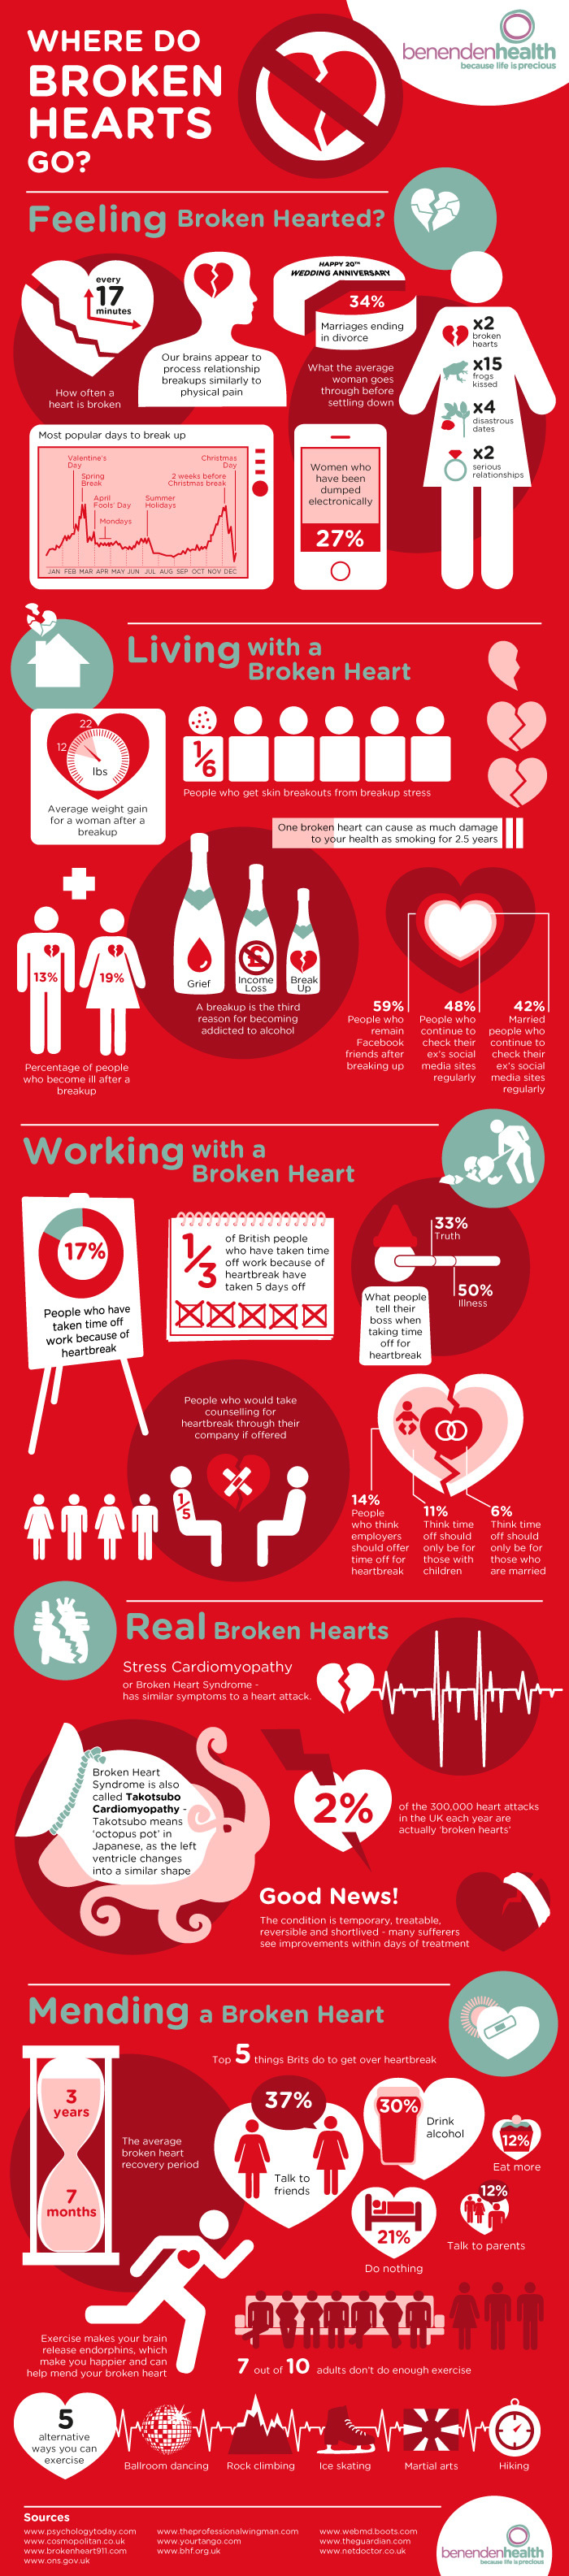 Heart break health infographic